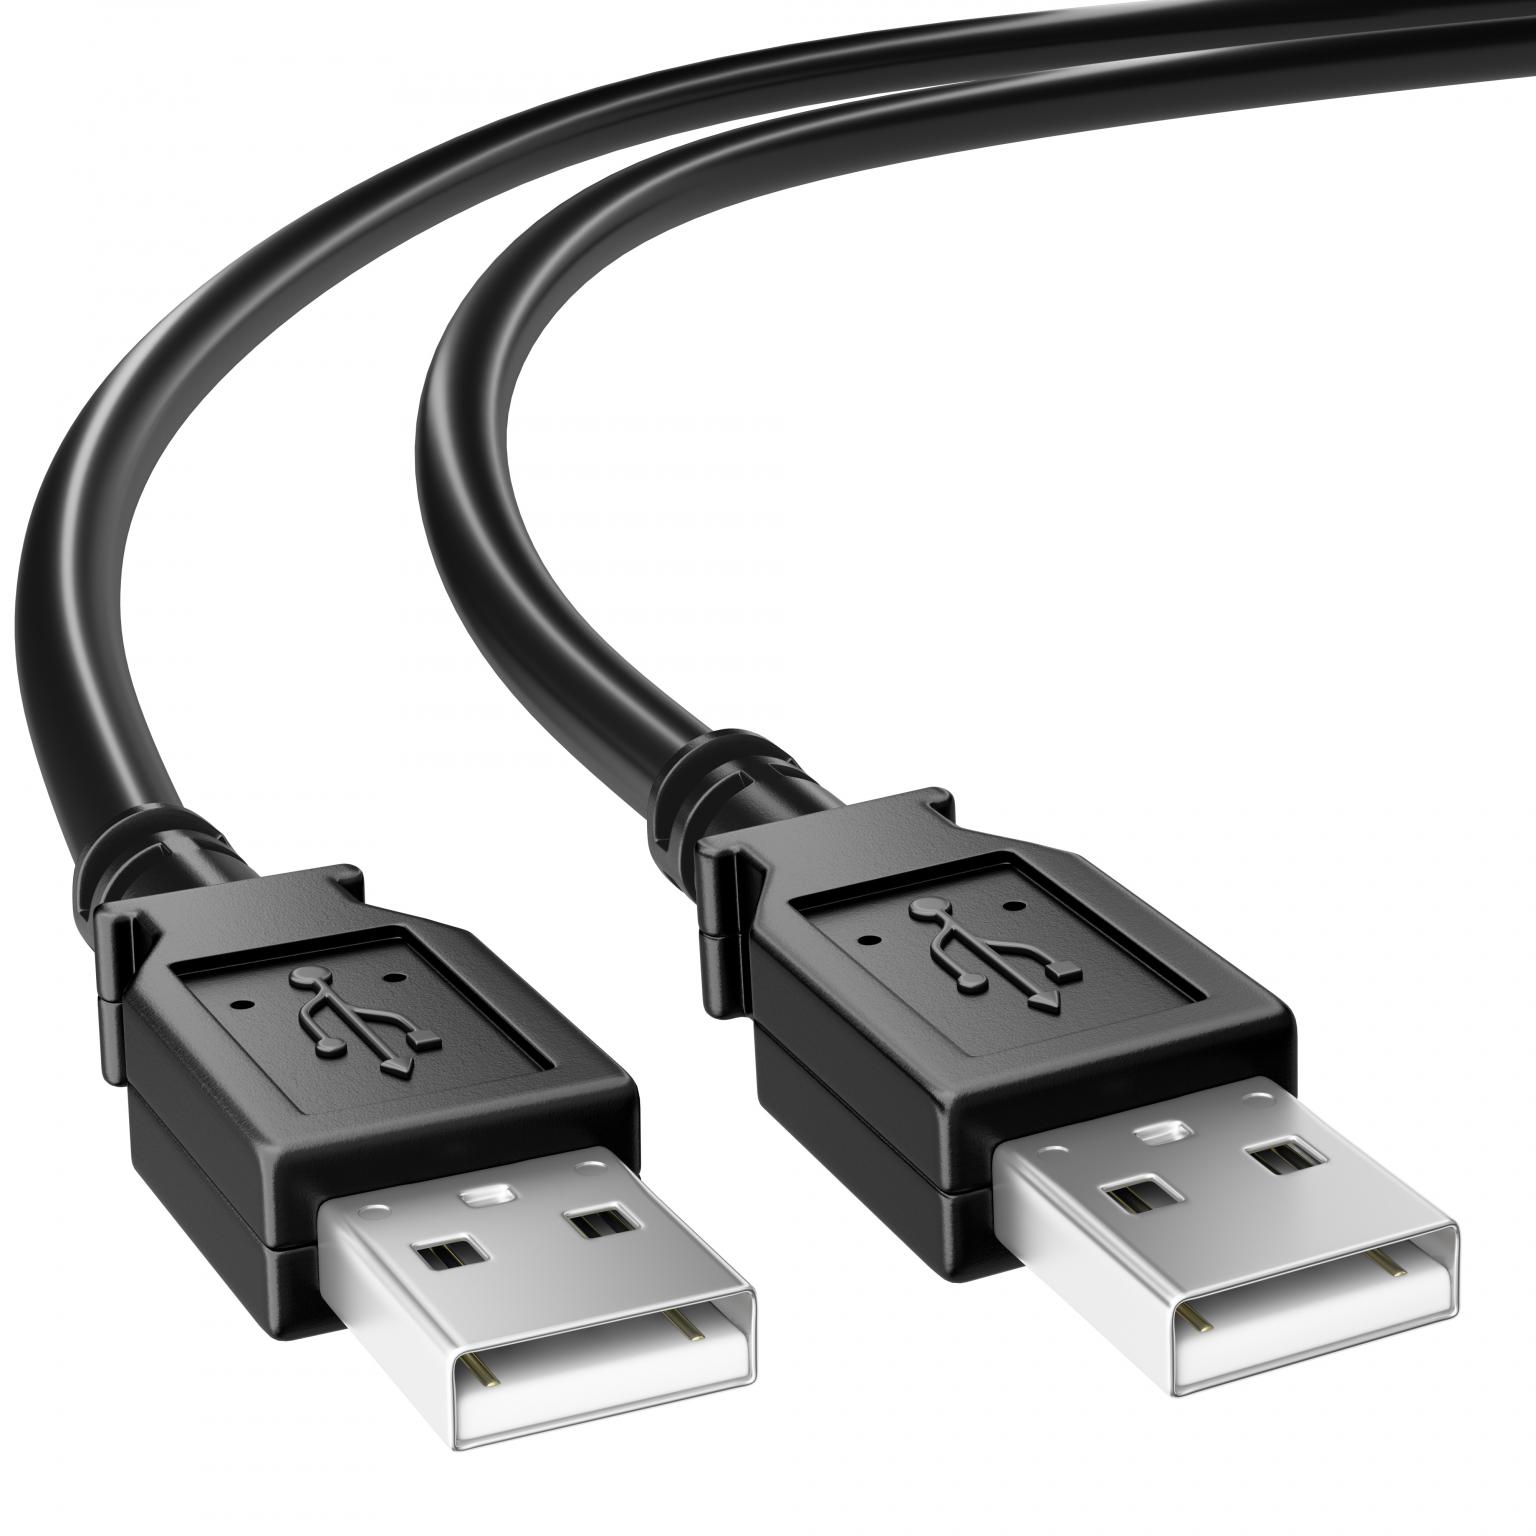 Onregelmatigheden Samenstelling Sanders USB 2.0 Kabel A male - A male 1.00 m Zwart - USB A naar USB A Kabel -  Zwart, Versie: 2.0 - High Speed, Aansluiting 1: USB A male, Aansluiting 2:  USB A male 1 meter.